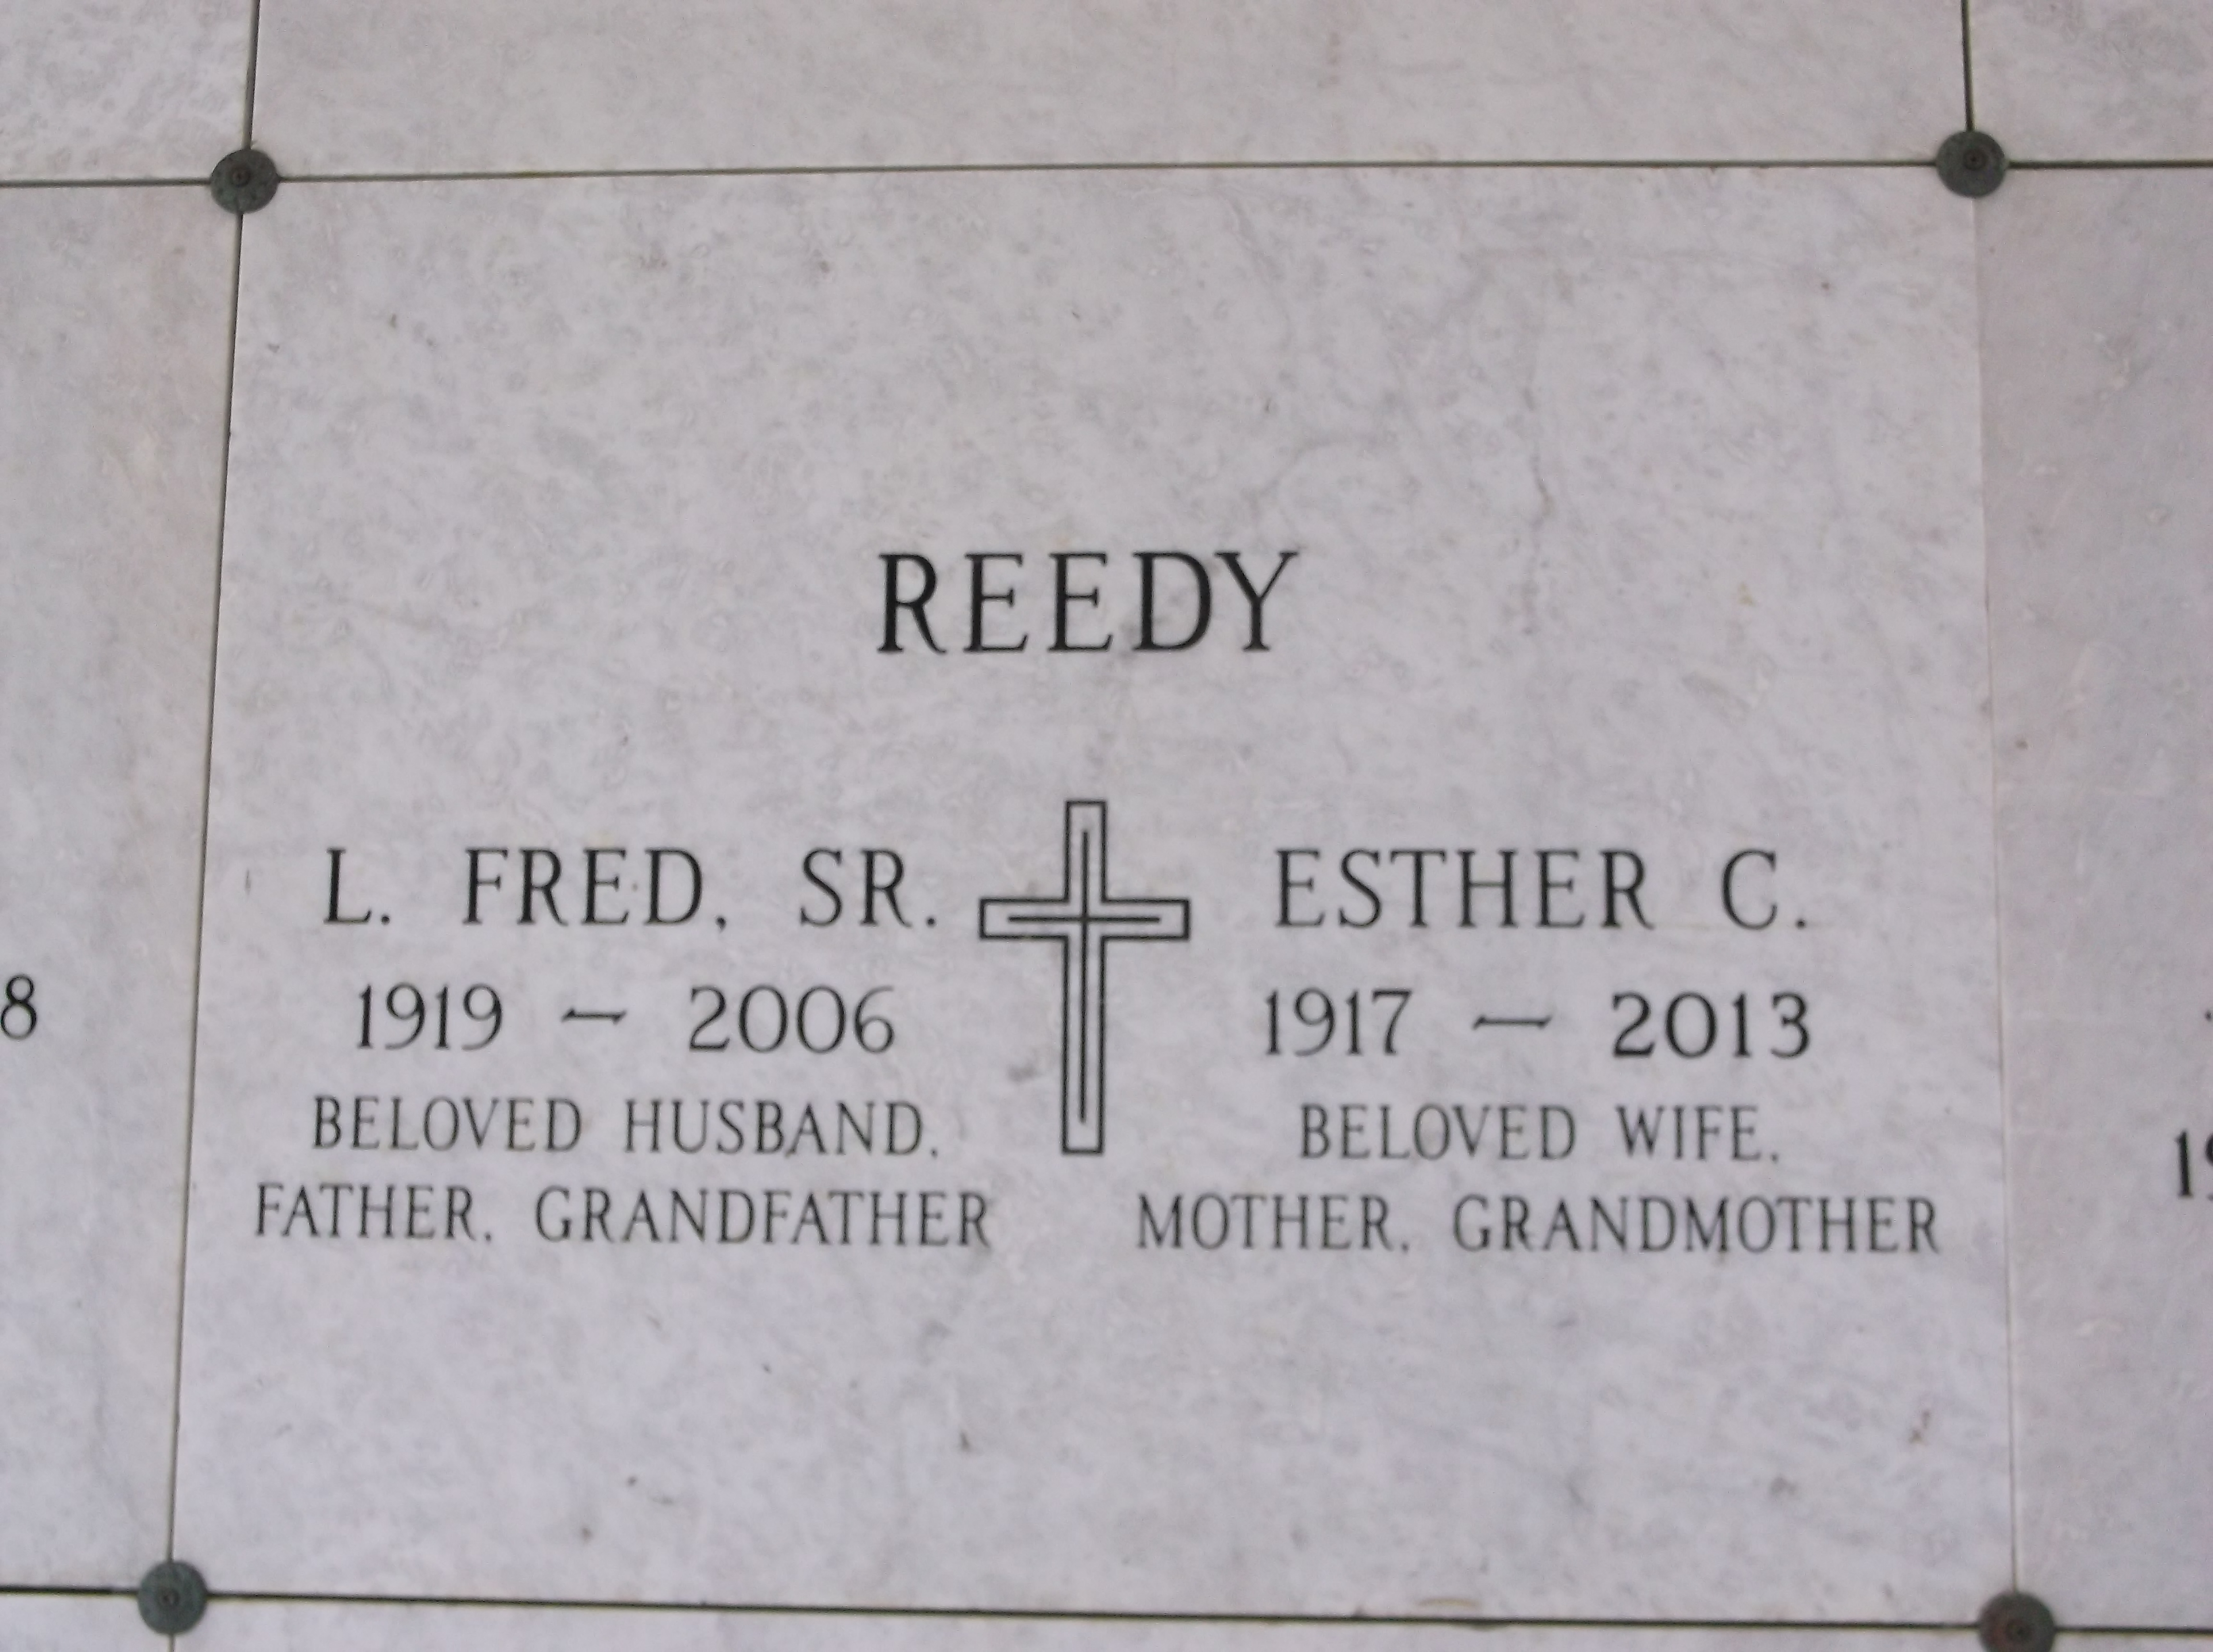 L Fred Reedy, Sr